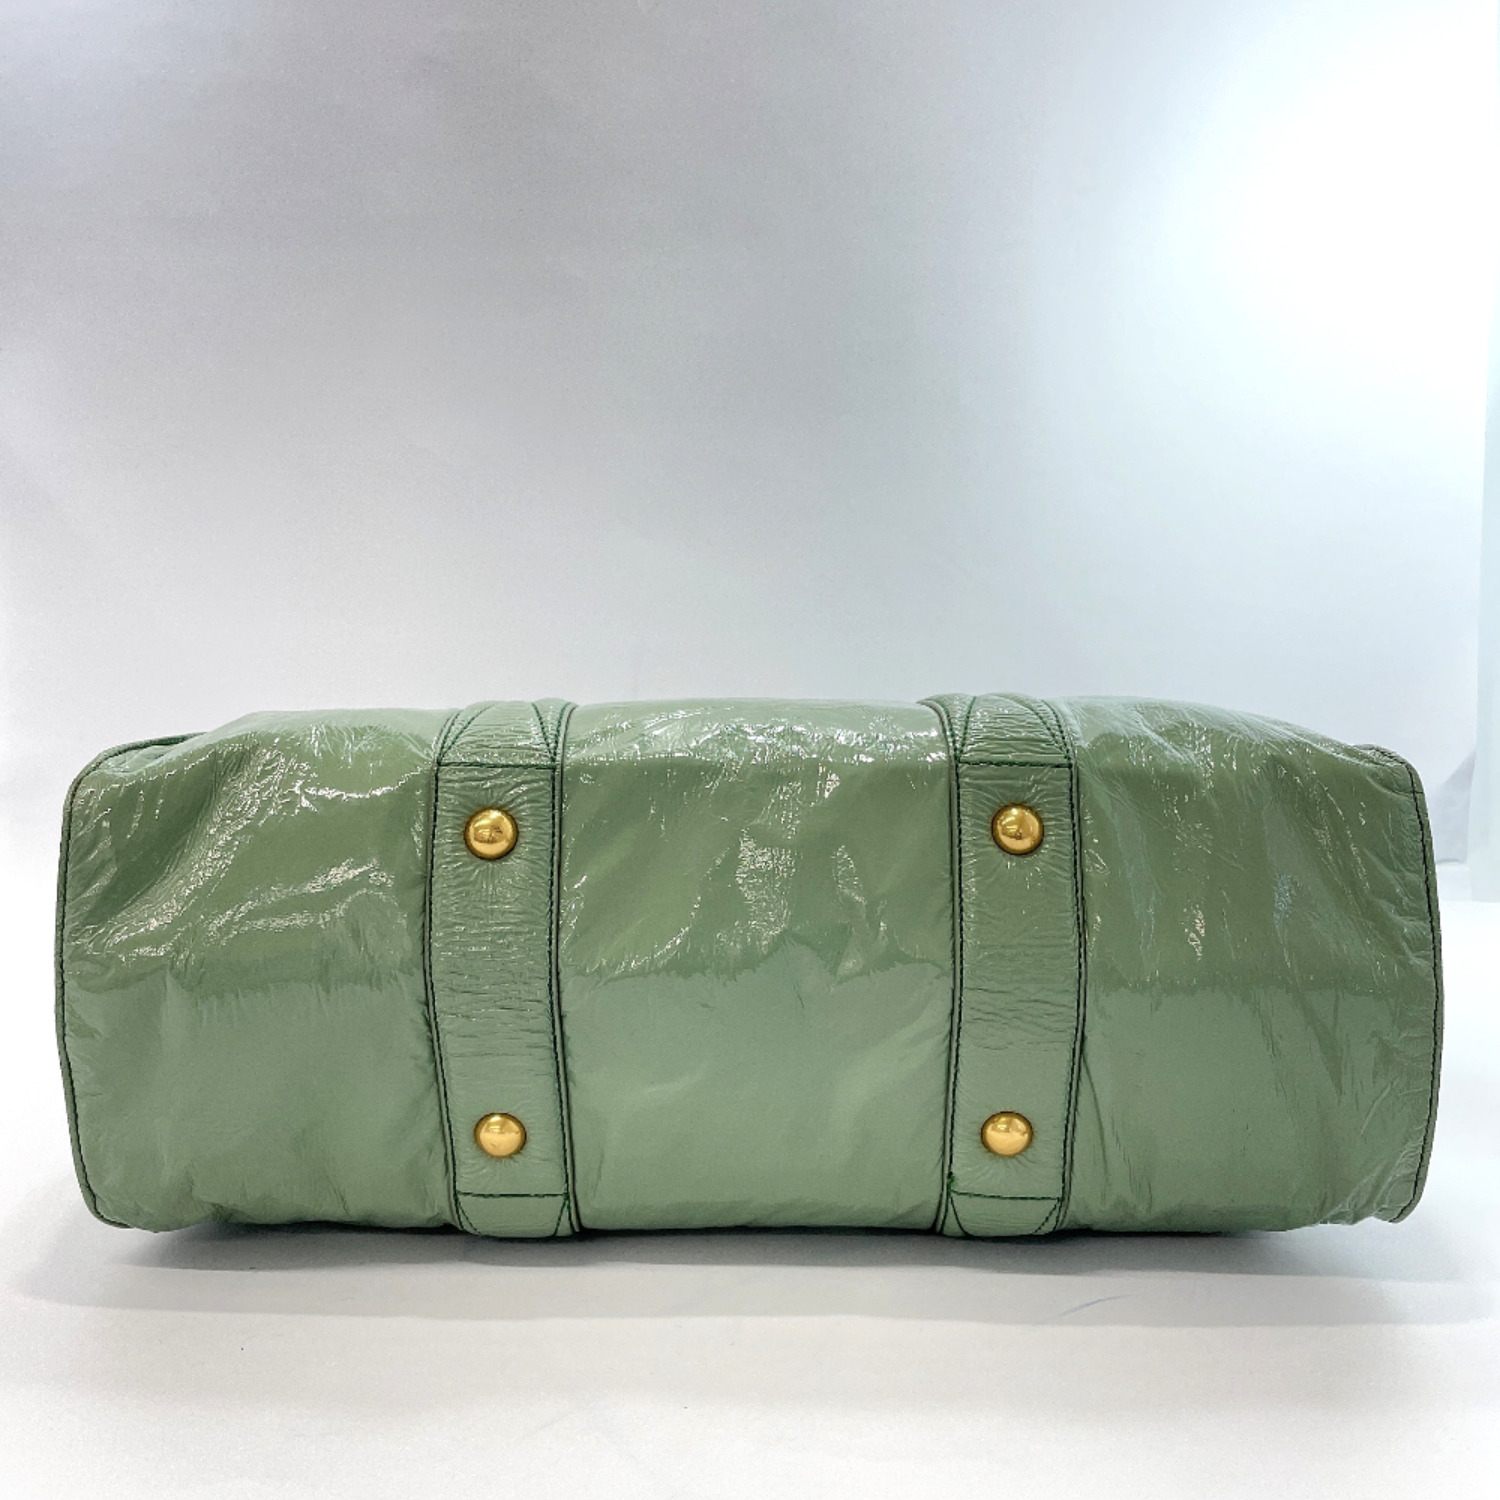 MIUMIU Tote Bag 2way Patent leather Women | eBay